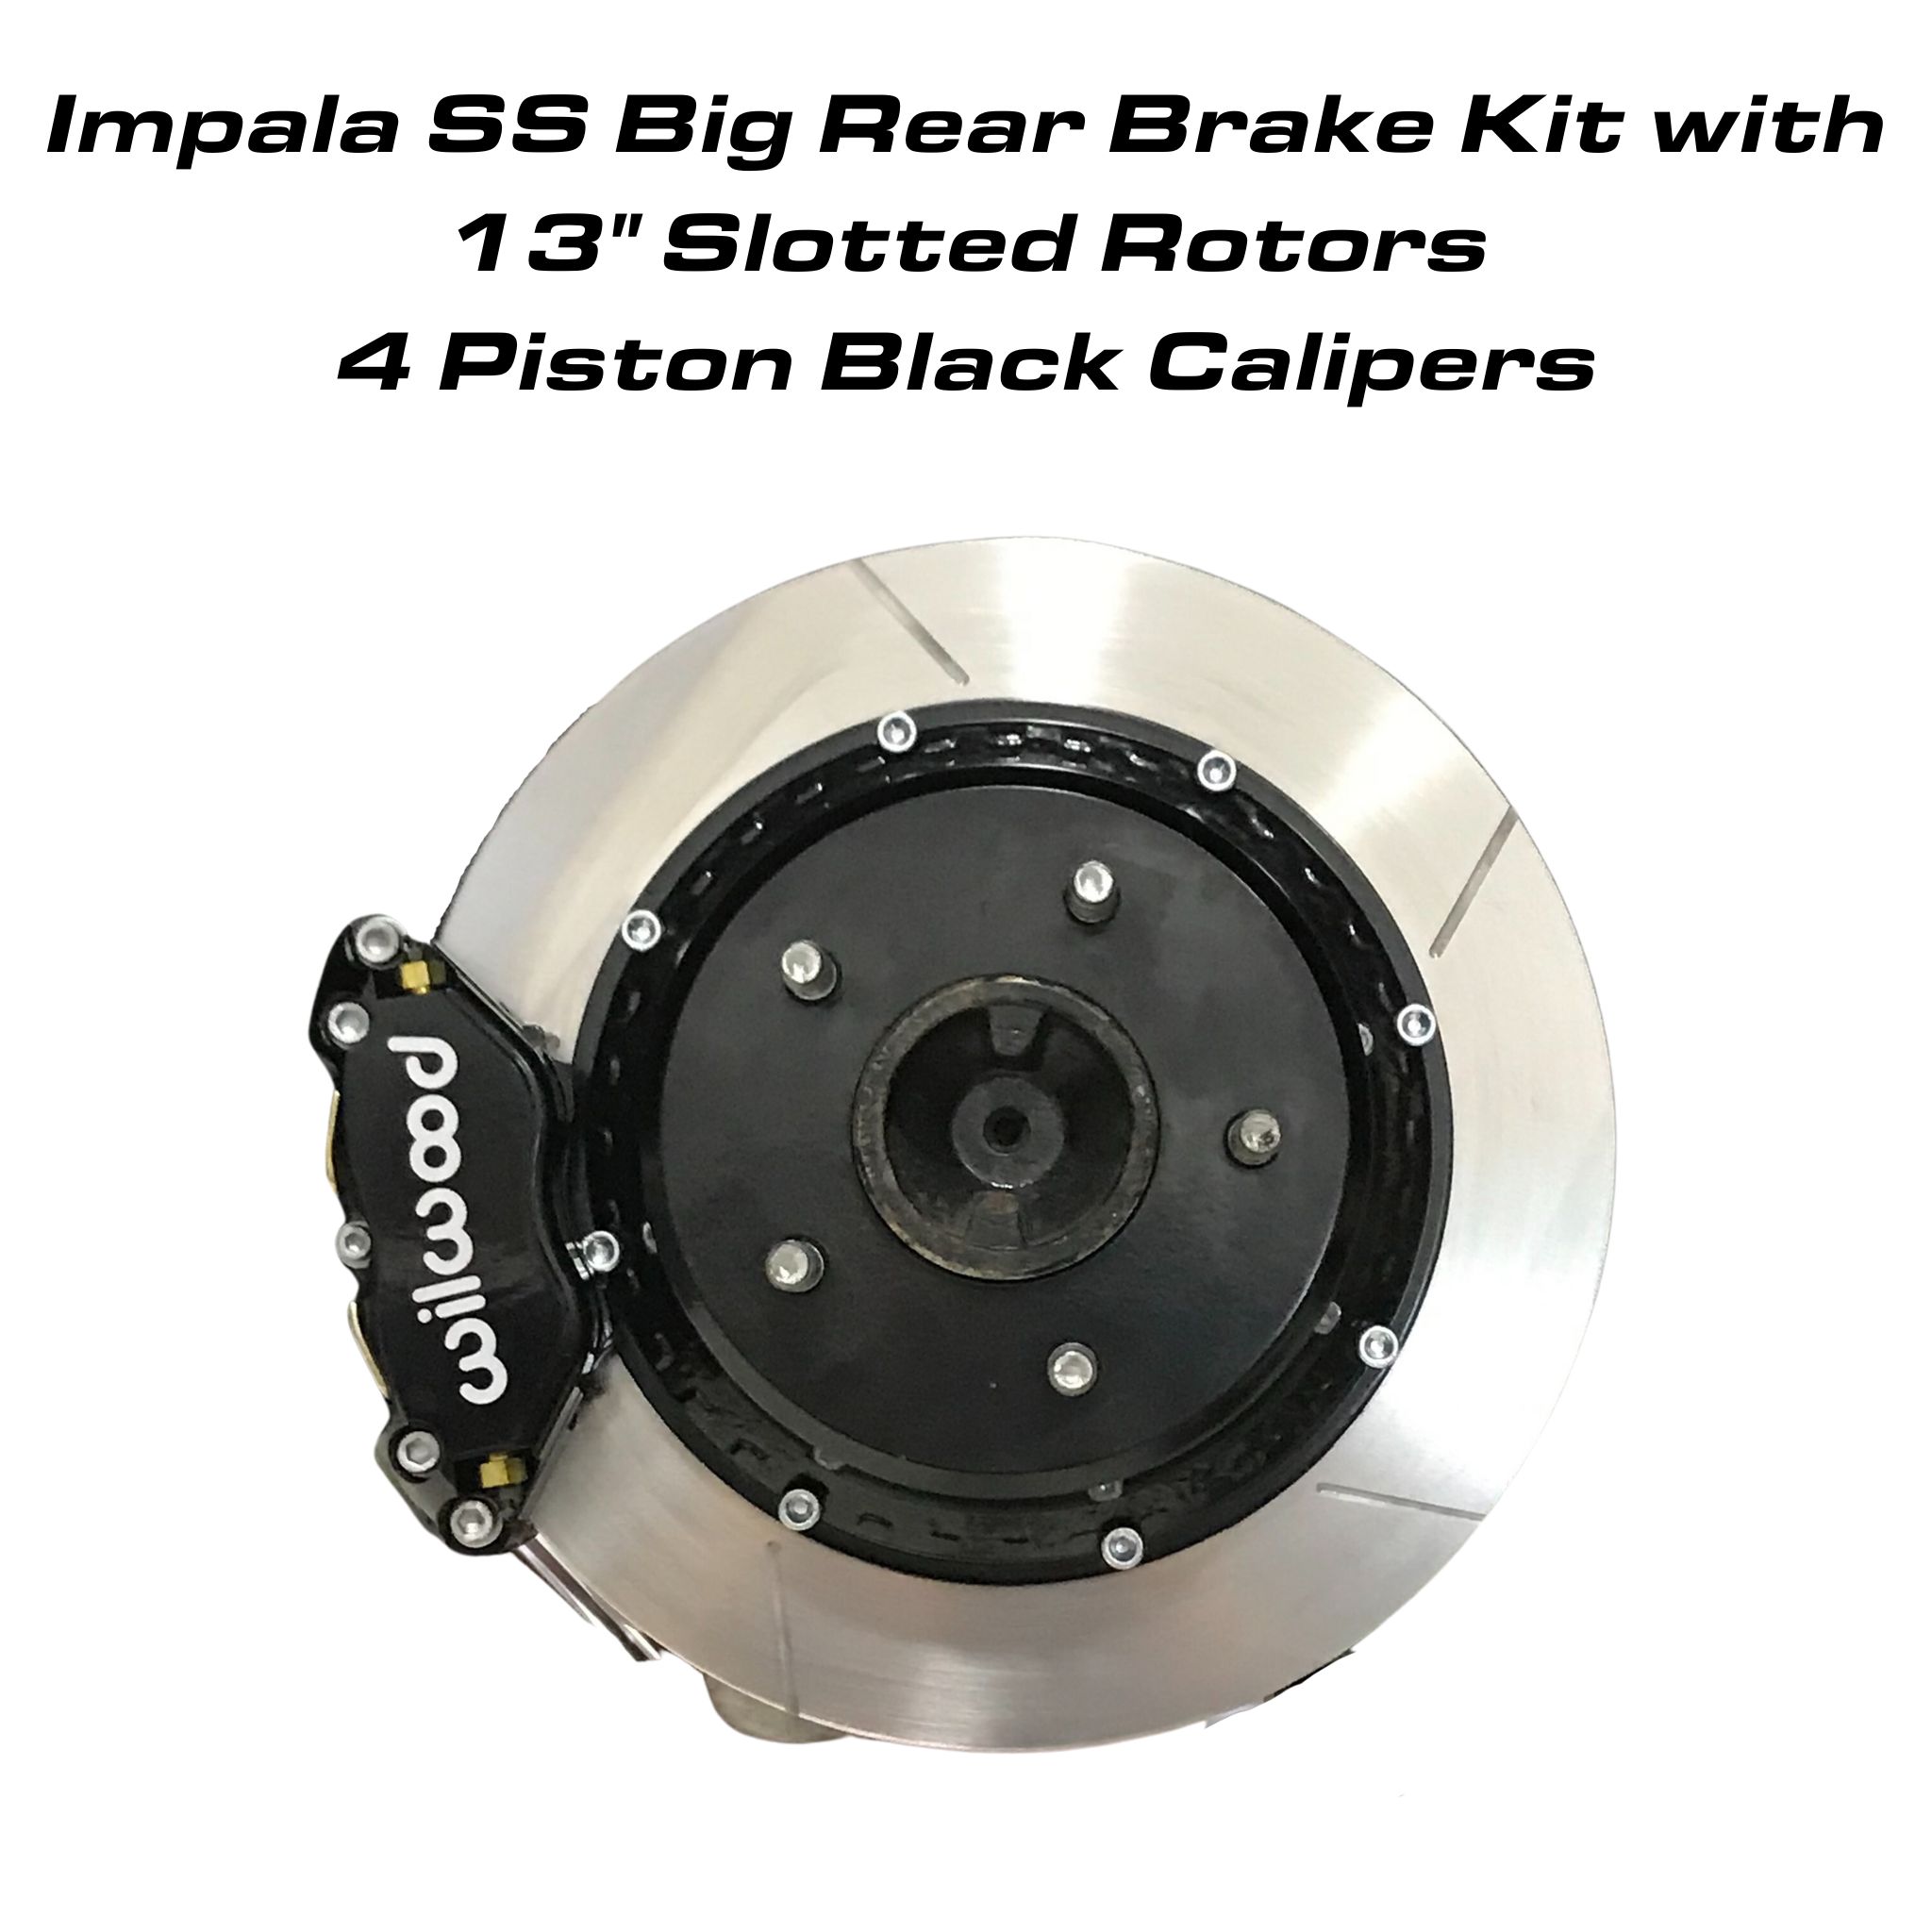 Impala SS Rear Big Brake Kit 13 Inch Slotted Rotors, Black 4 Piston Calipers